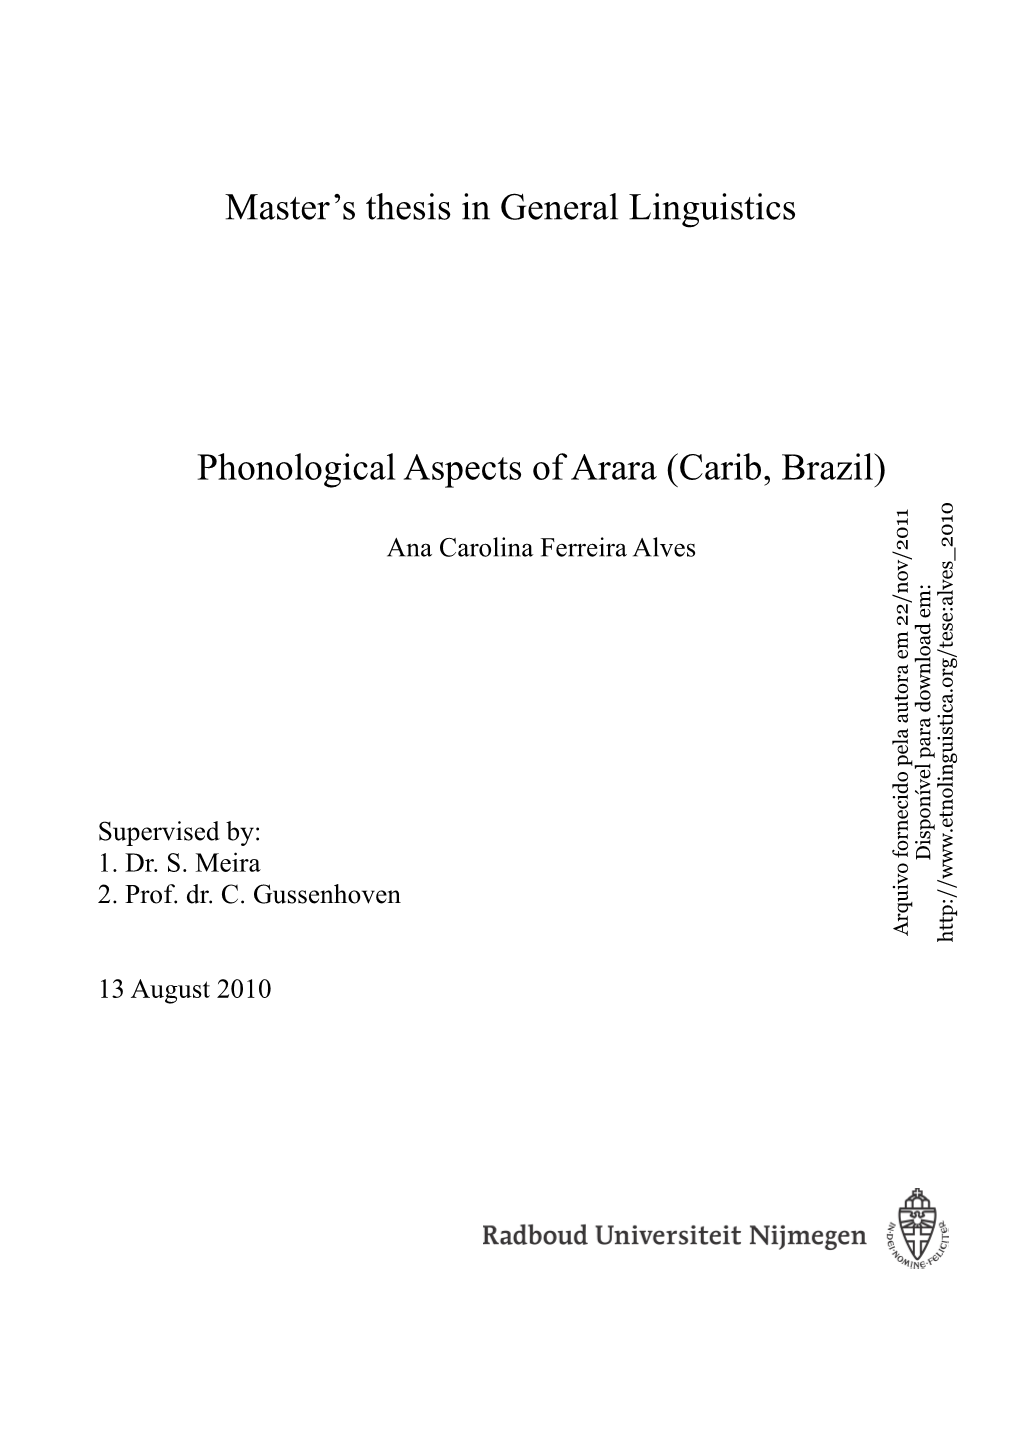 Phonological Aspects of Arara (Carib, Brazil)